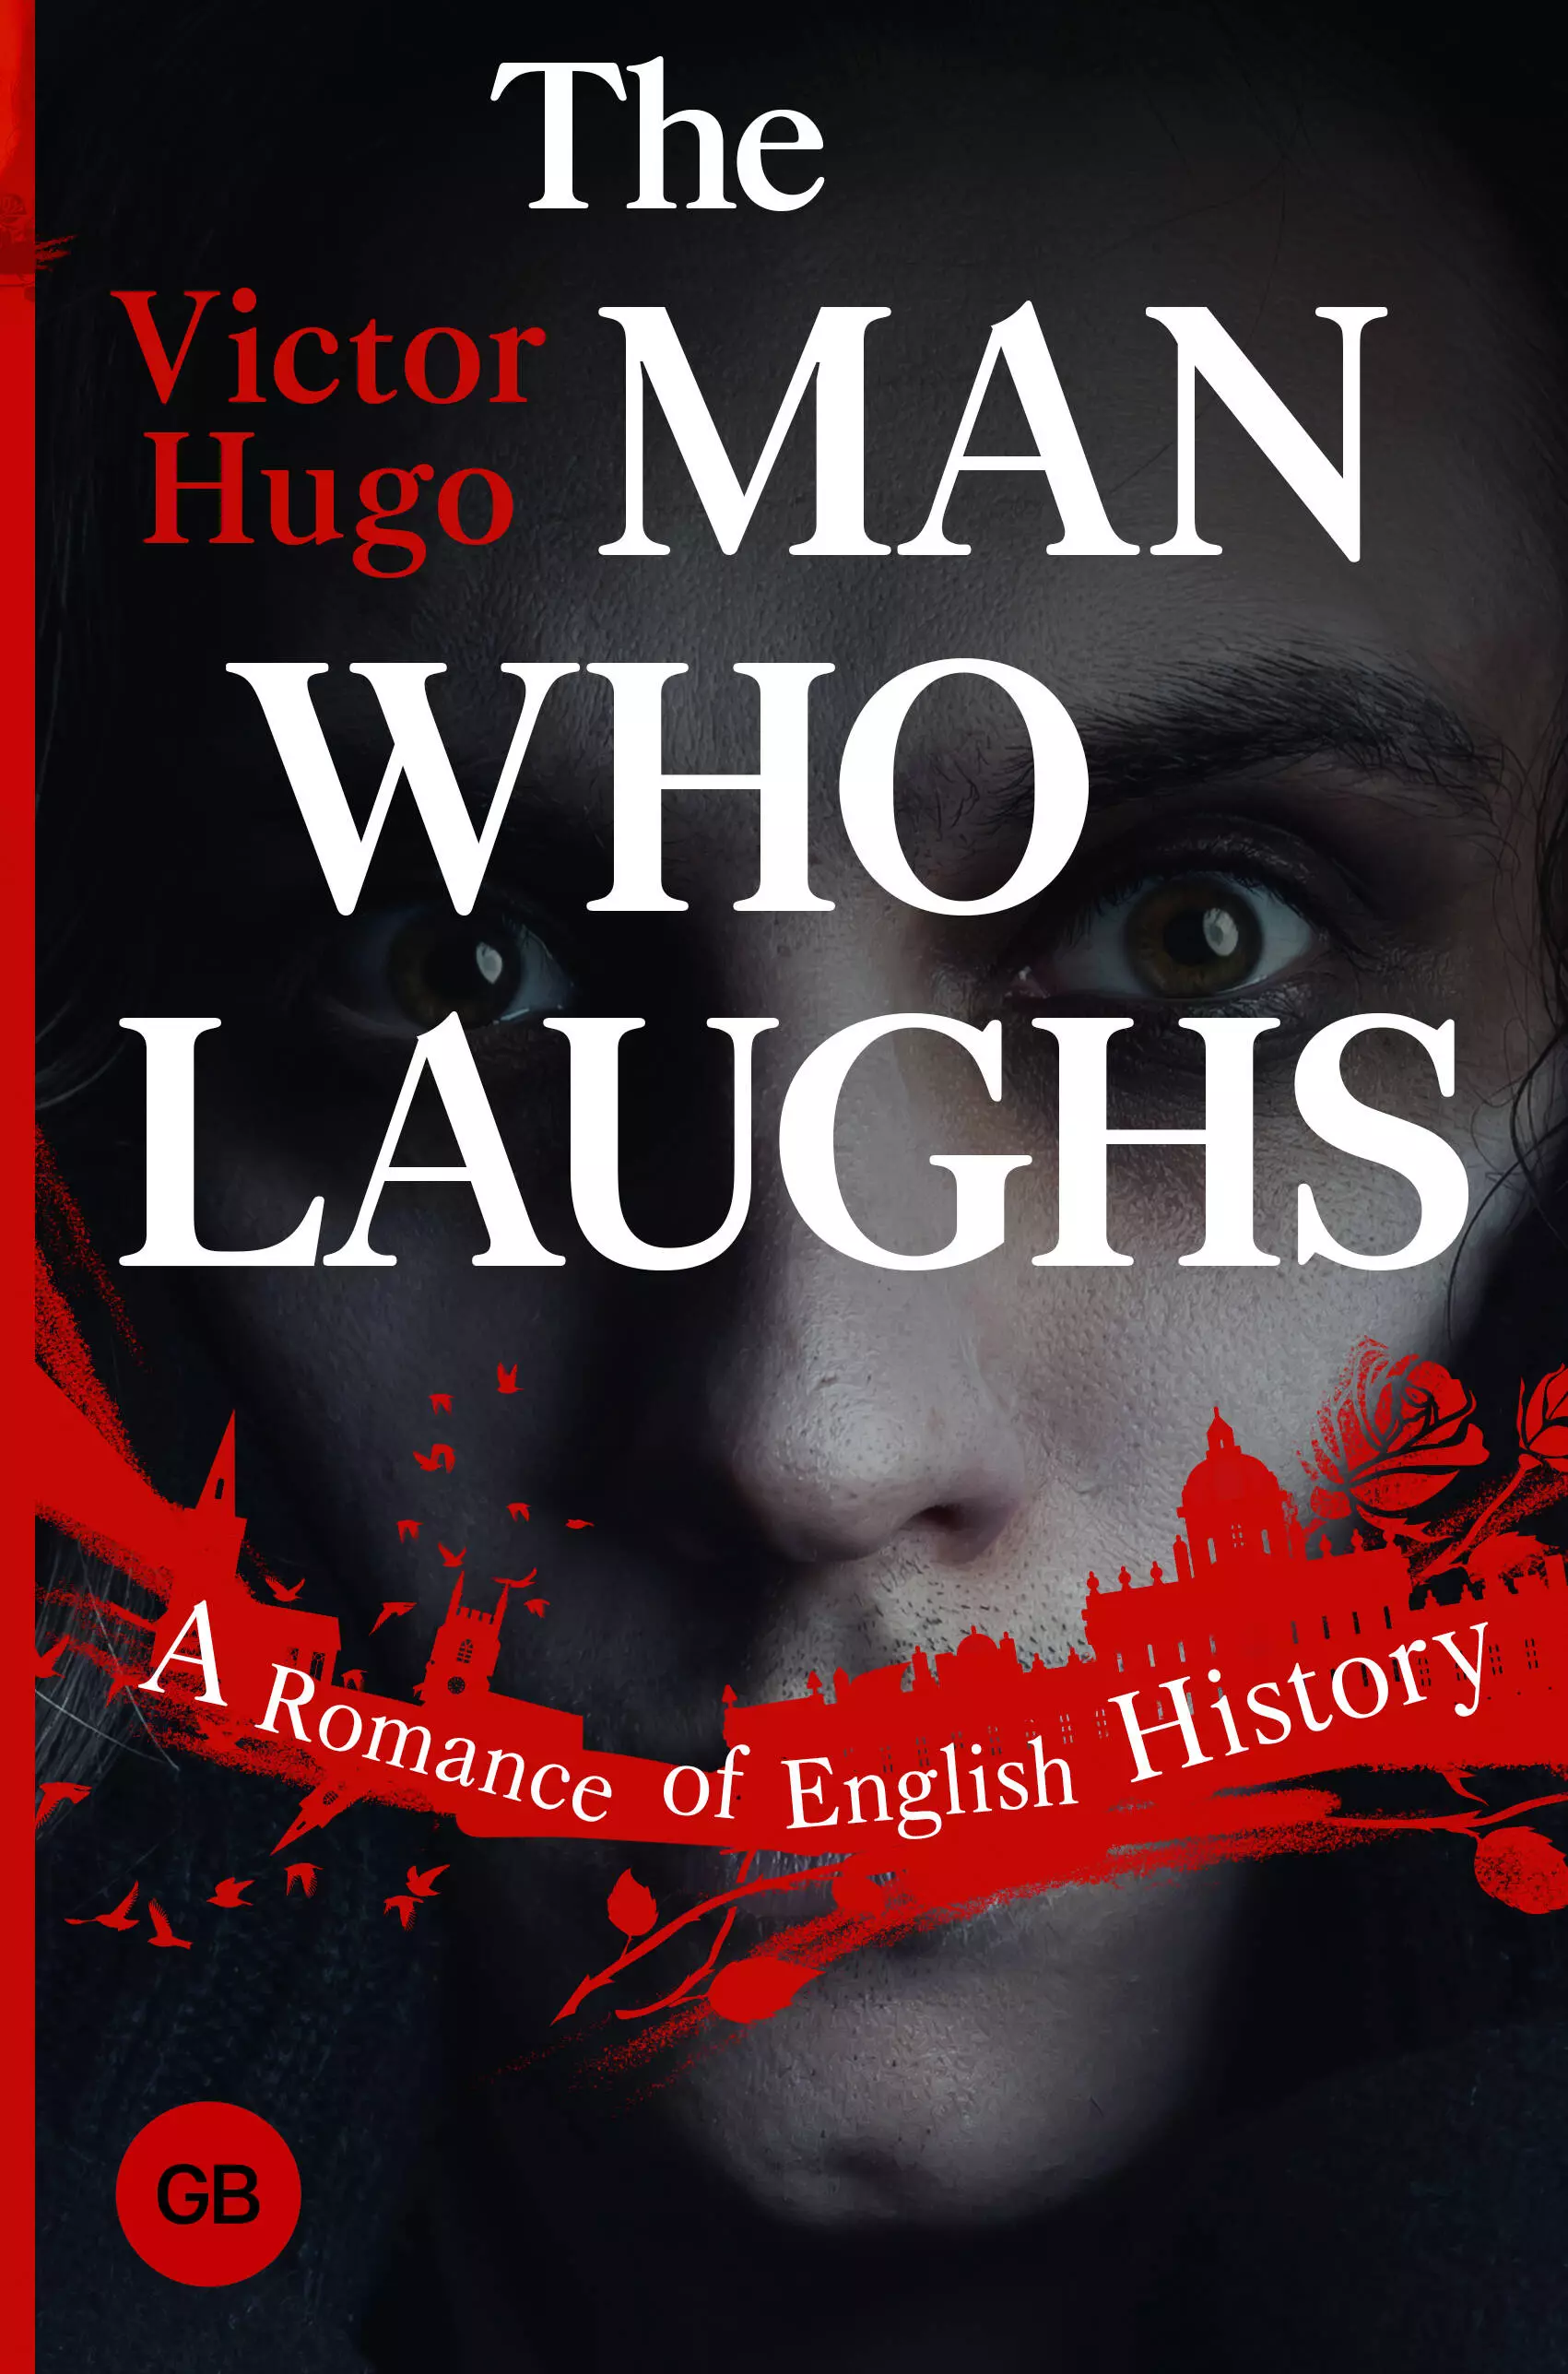 Гюго Виктор Мари The Man Who Laughs: A Romance of English History